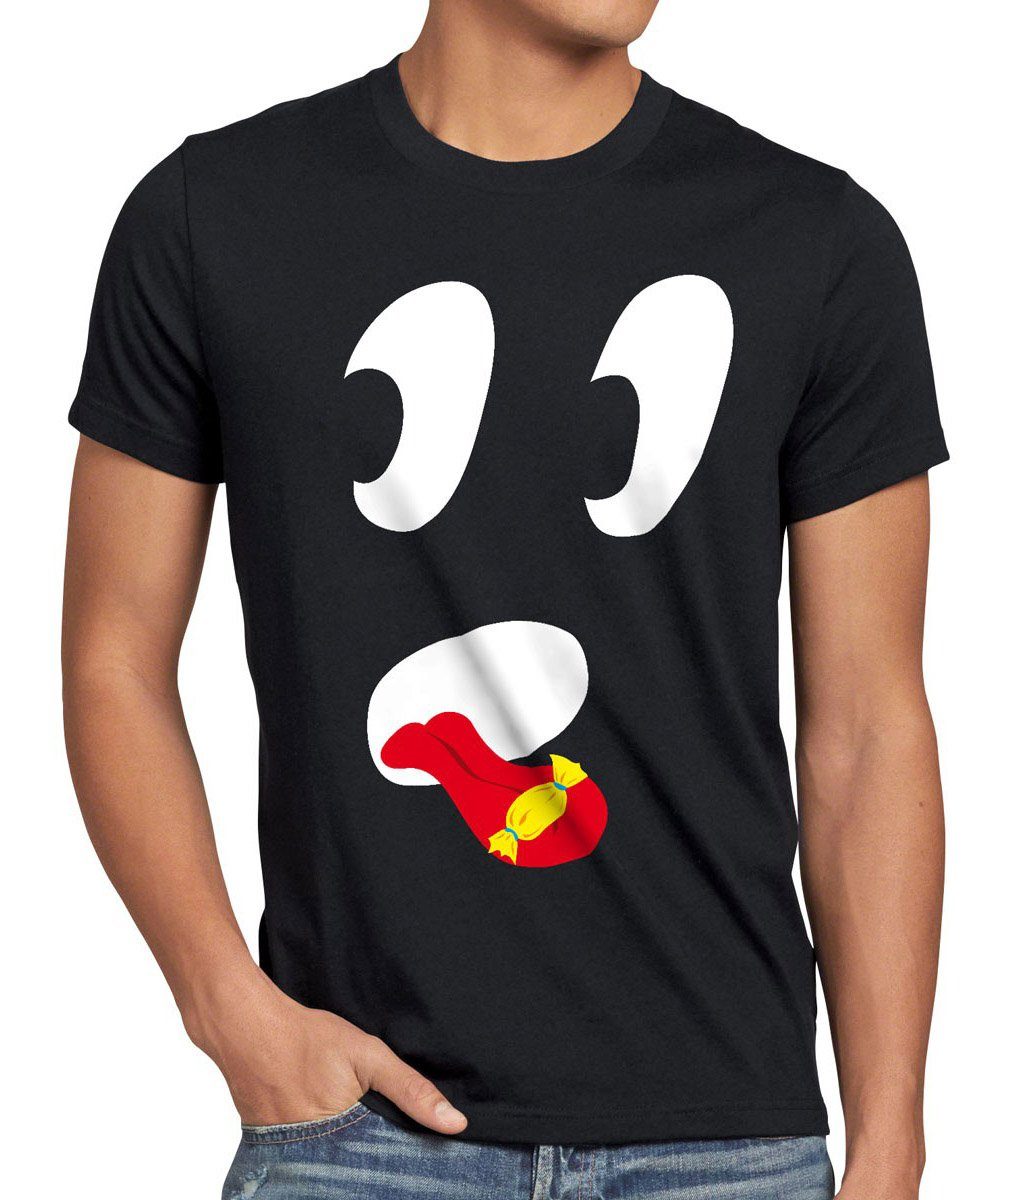 Geist style3 Fun Gesicht Herren Halloween Kostüm T-Shirt Party Fasching Süßer Kopf Print-Shirt schwarz Gag